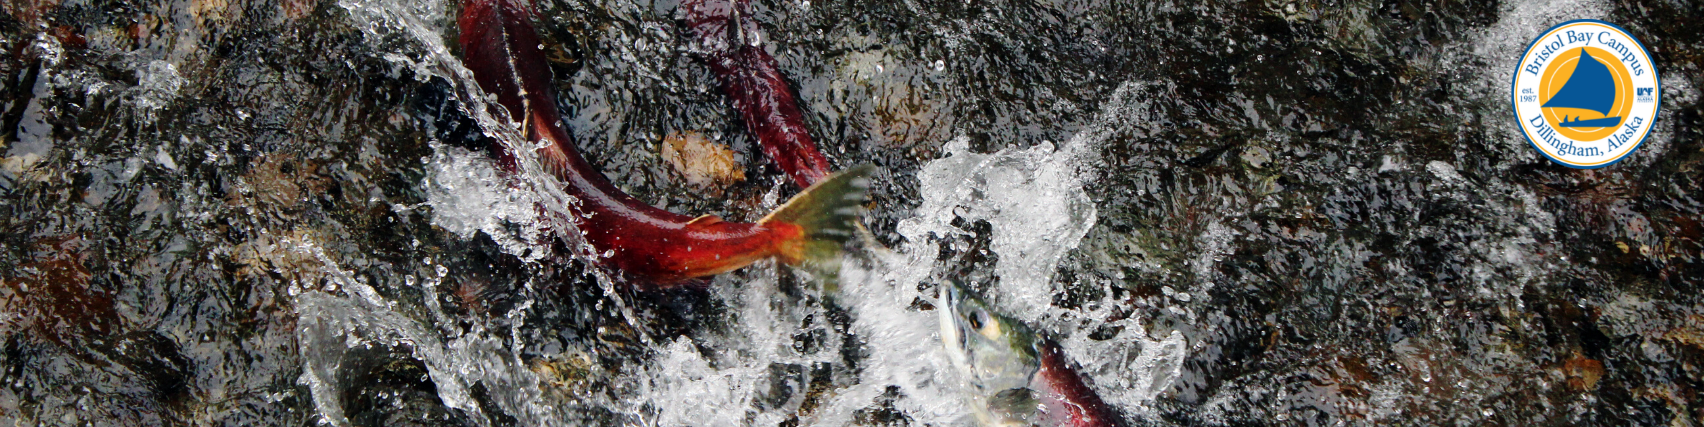 Banner- Salmon